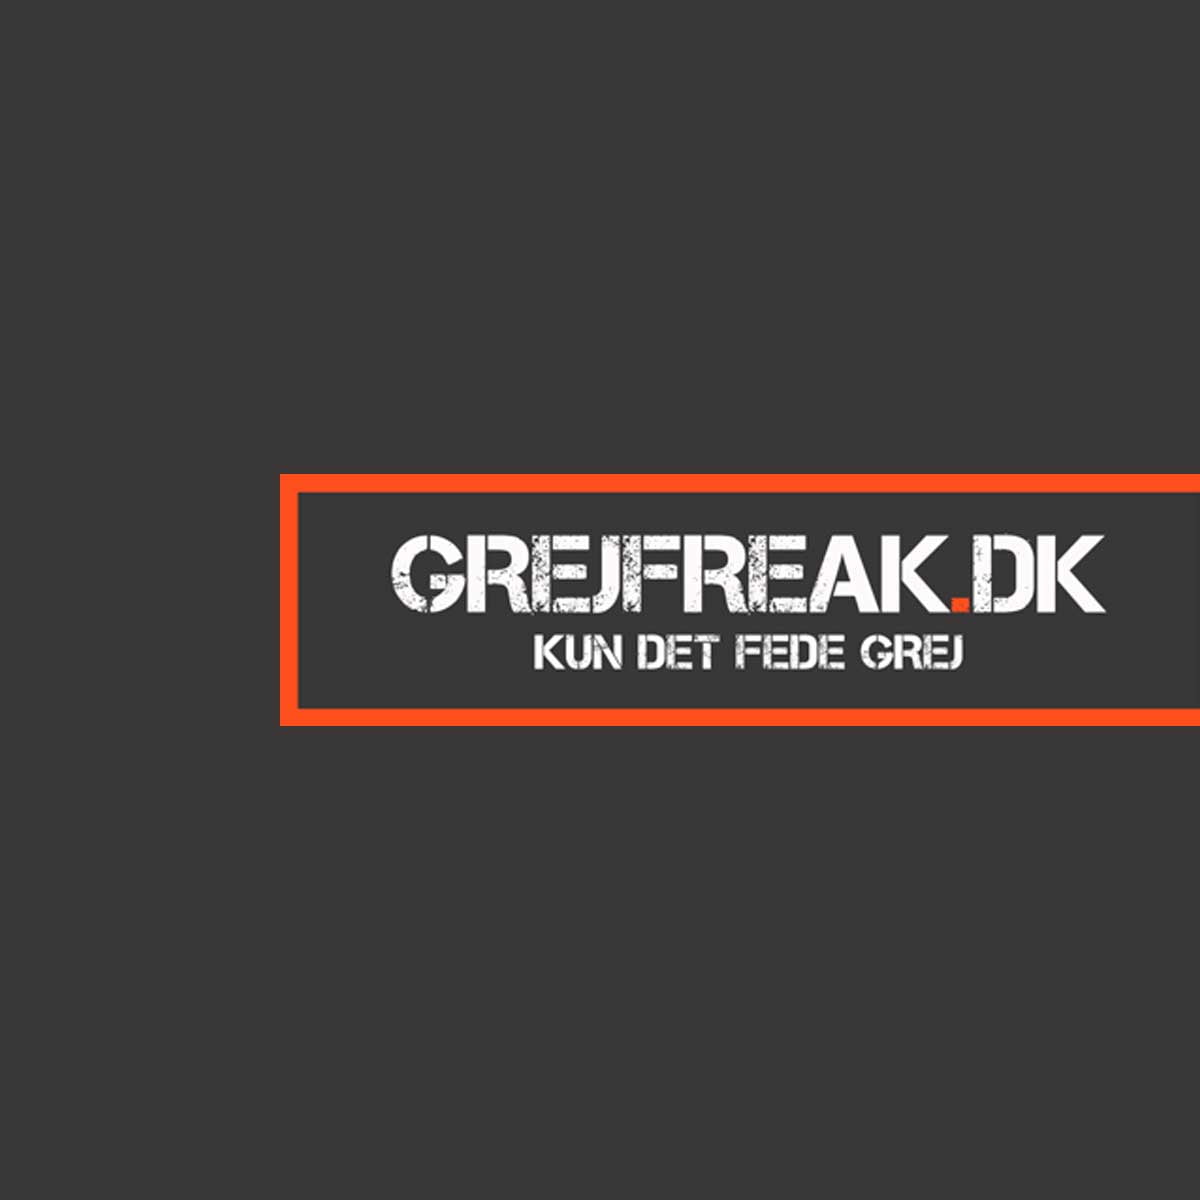 GrejFreak.dk